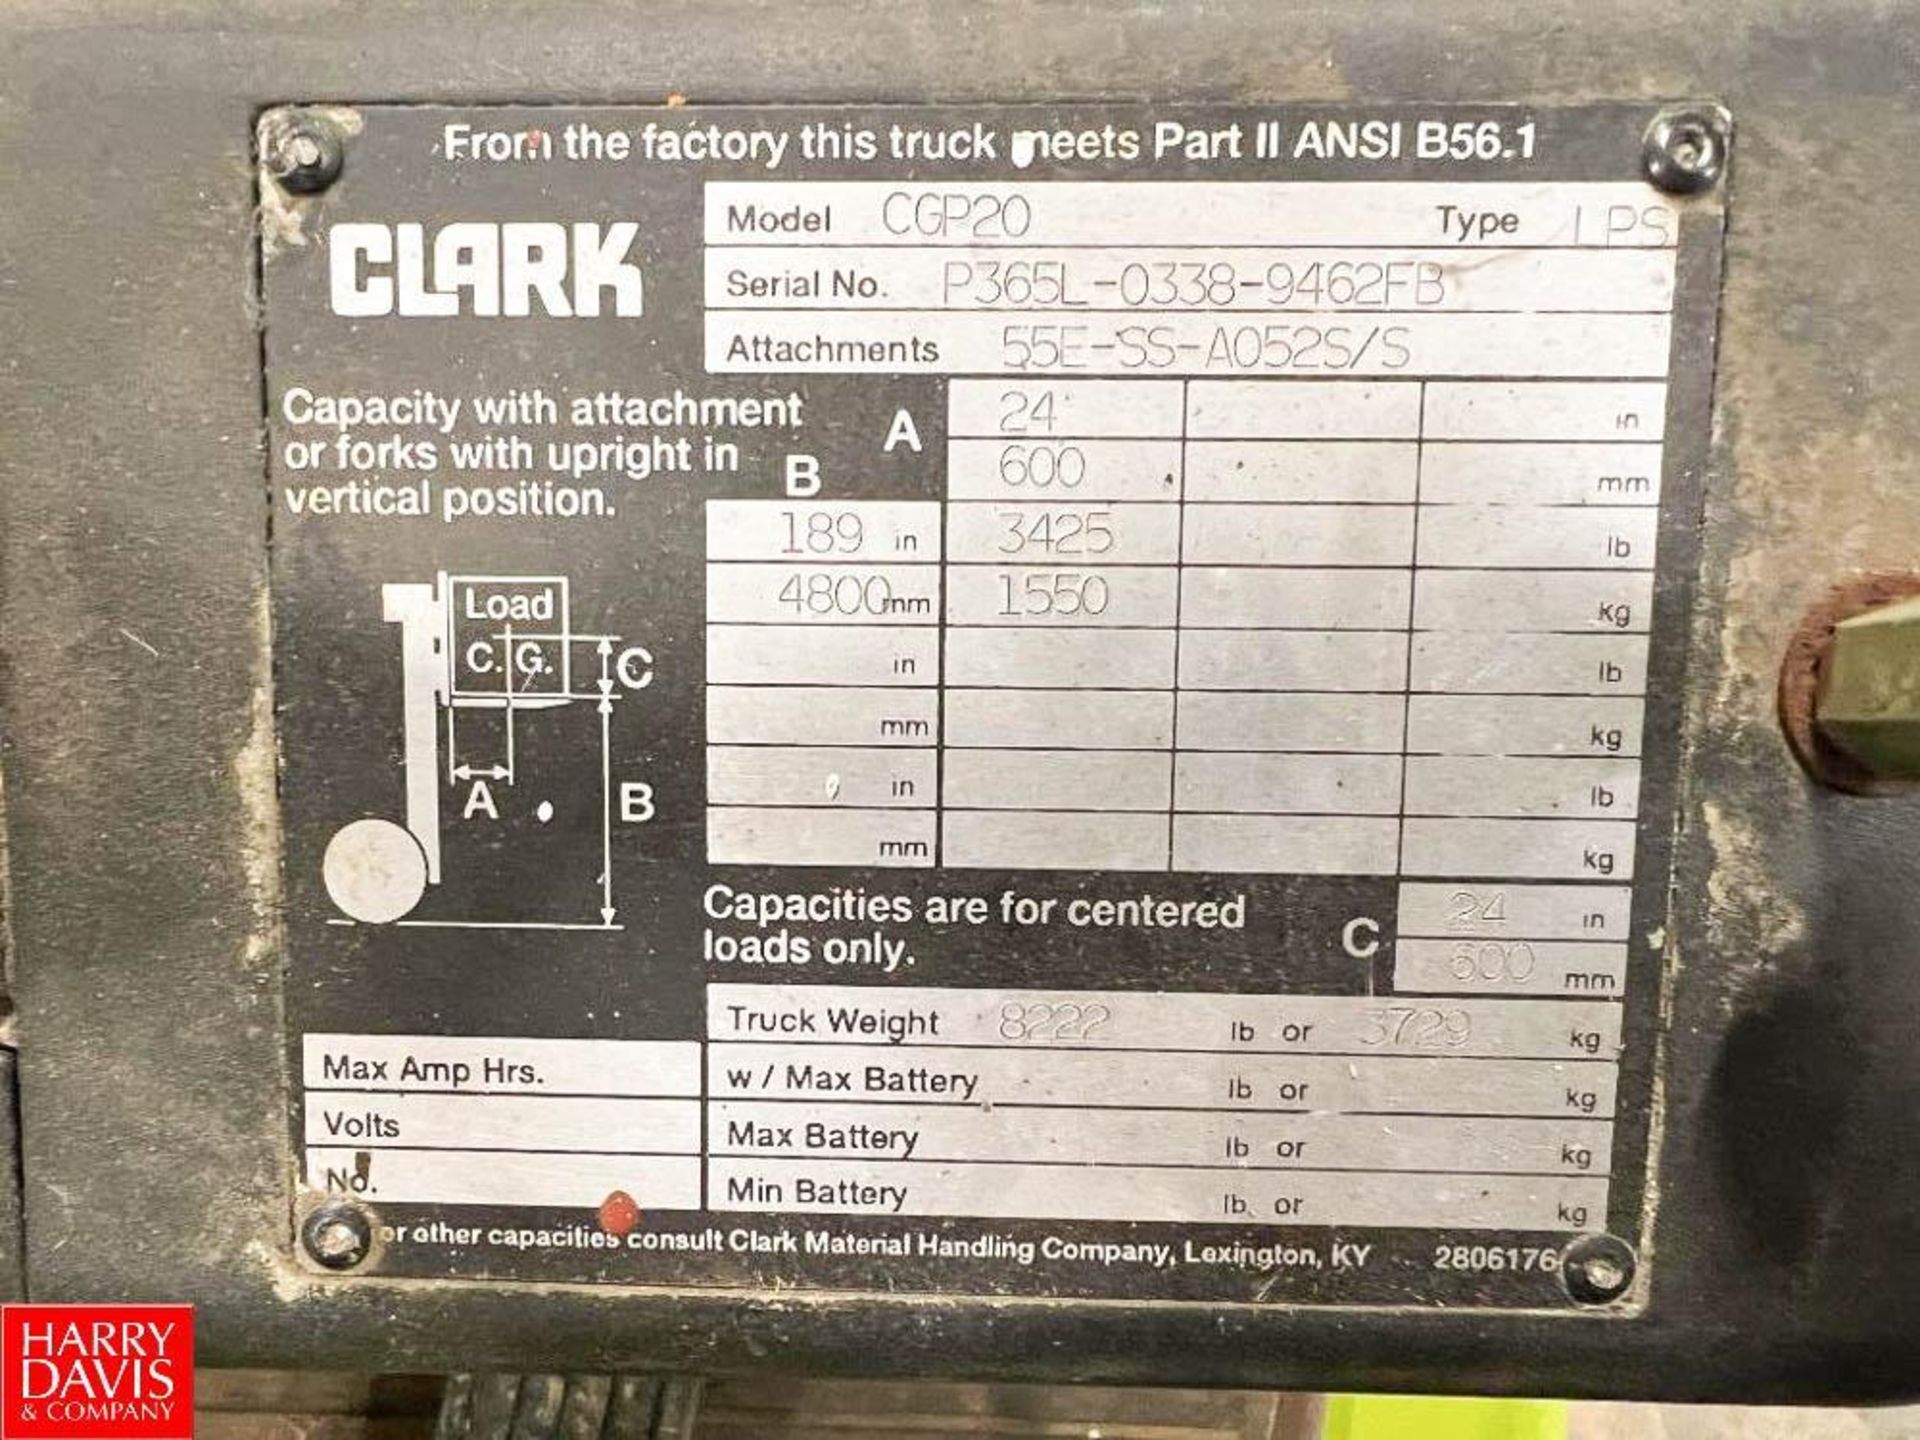 Clark 4,500 LB Capacity Propane Operated Fork Lift , Model: CGP20, S/N: P365L-0338-9462FB - Image 2 of 2